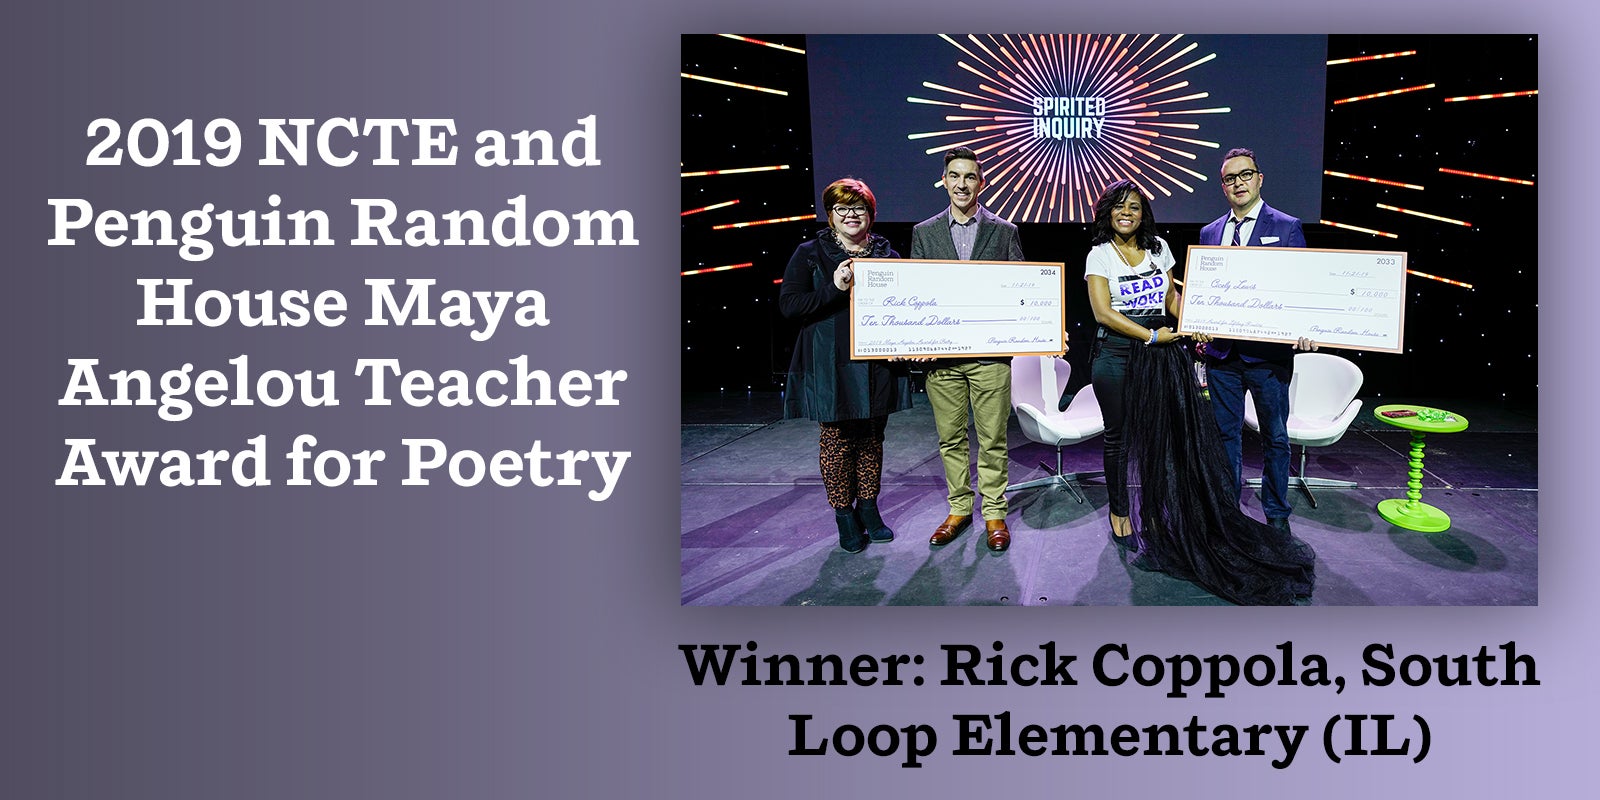 2019 NCTE and Penguin Random House Maya Angelou Teacher Award for Poetry Winner: Rick Coppola, South Loop Elementary (IL)